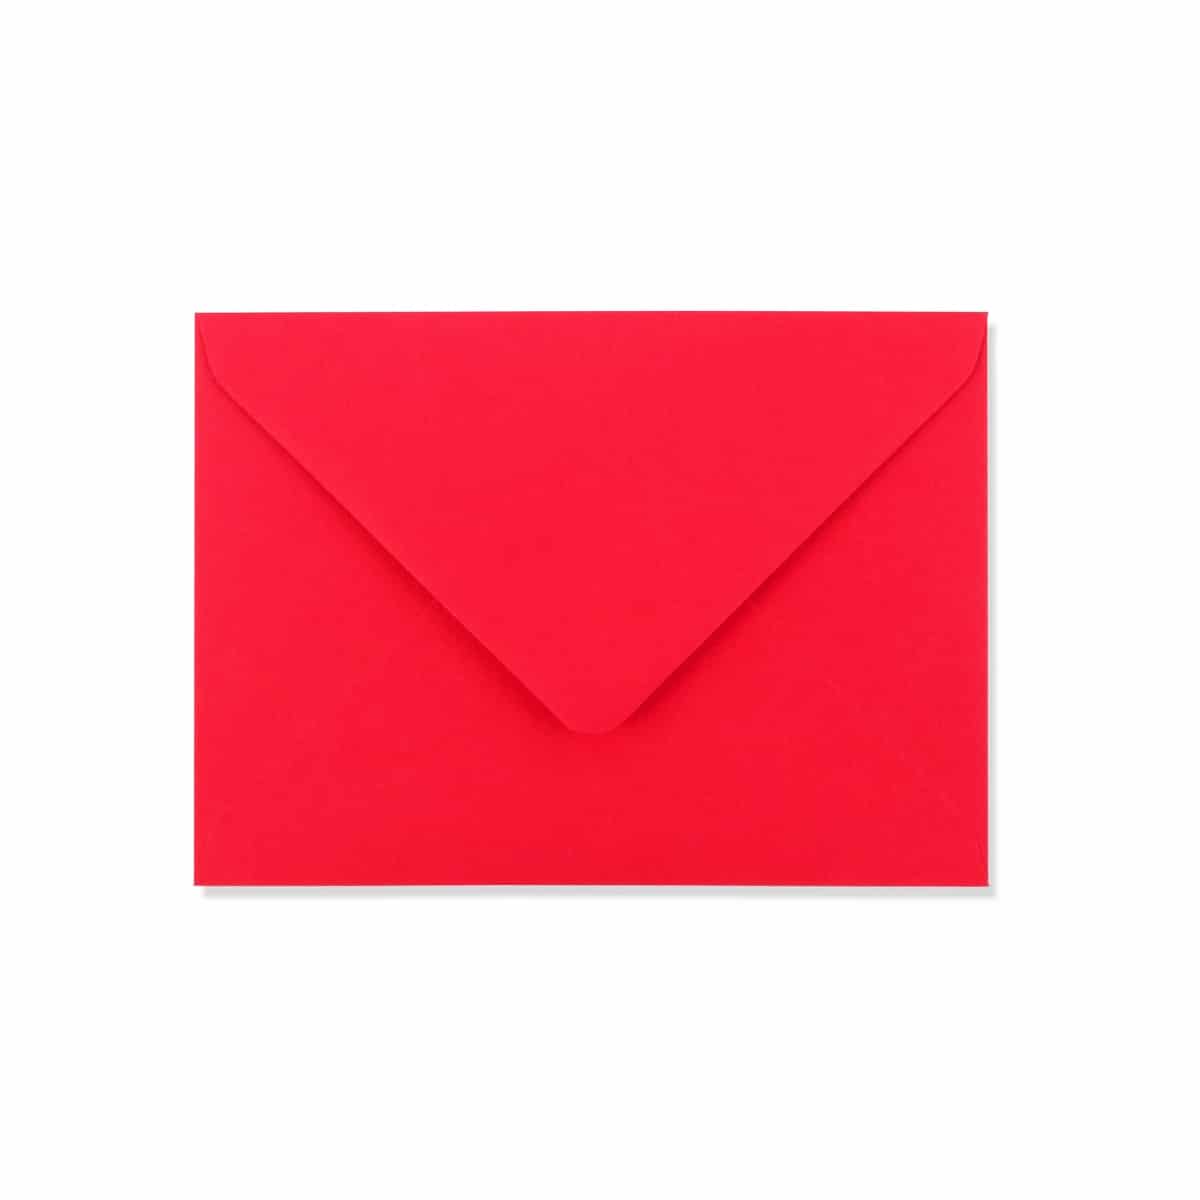 Set of 5 red envelopes